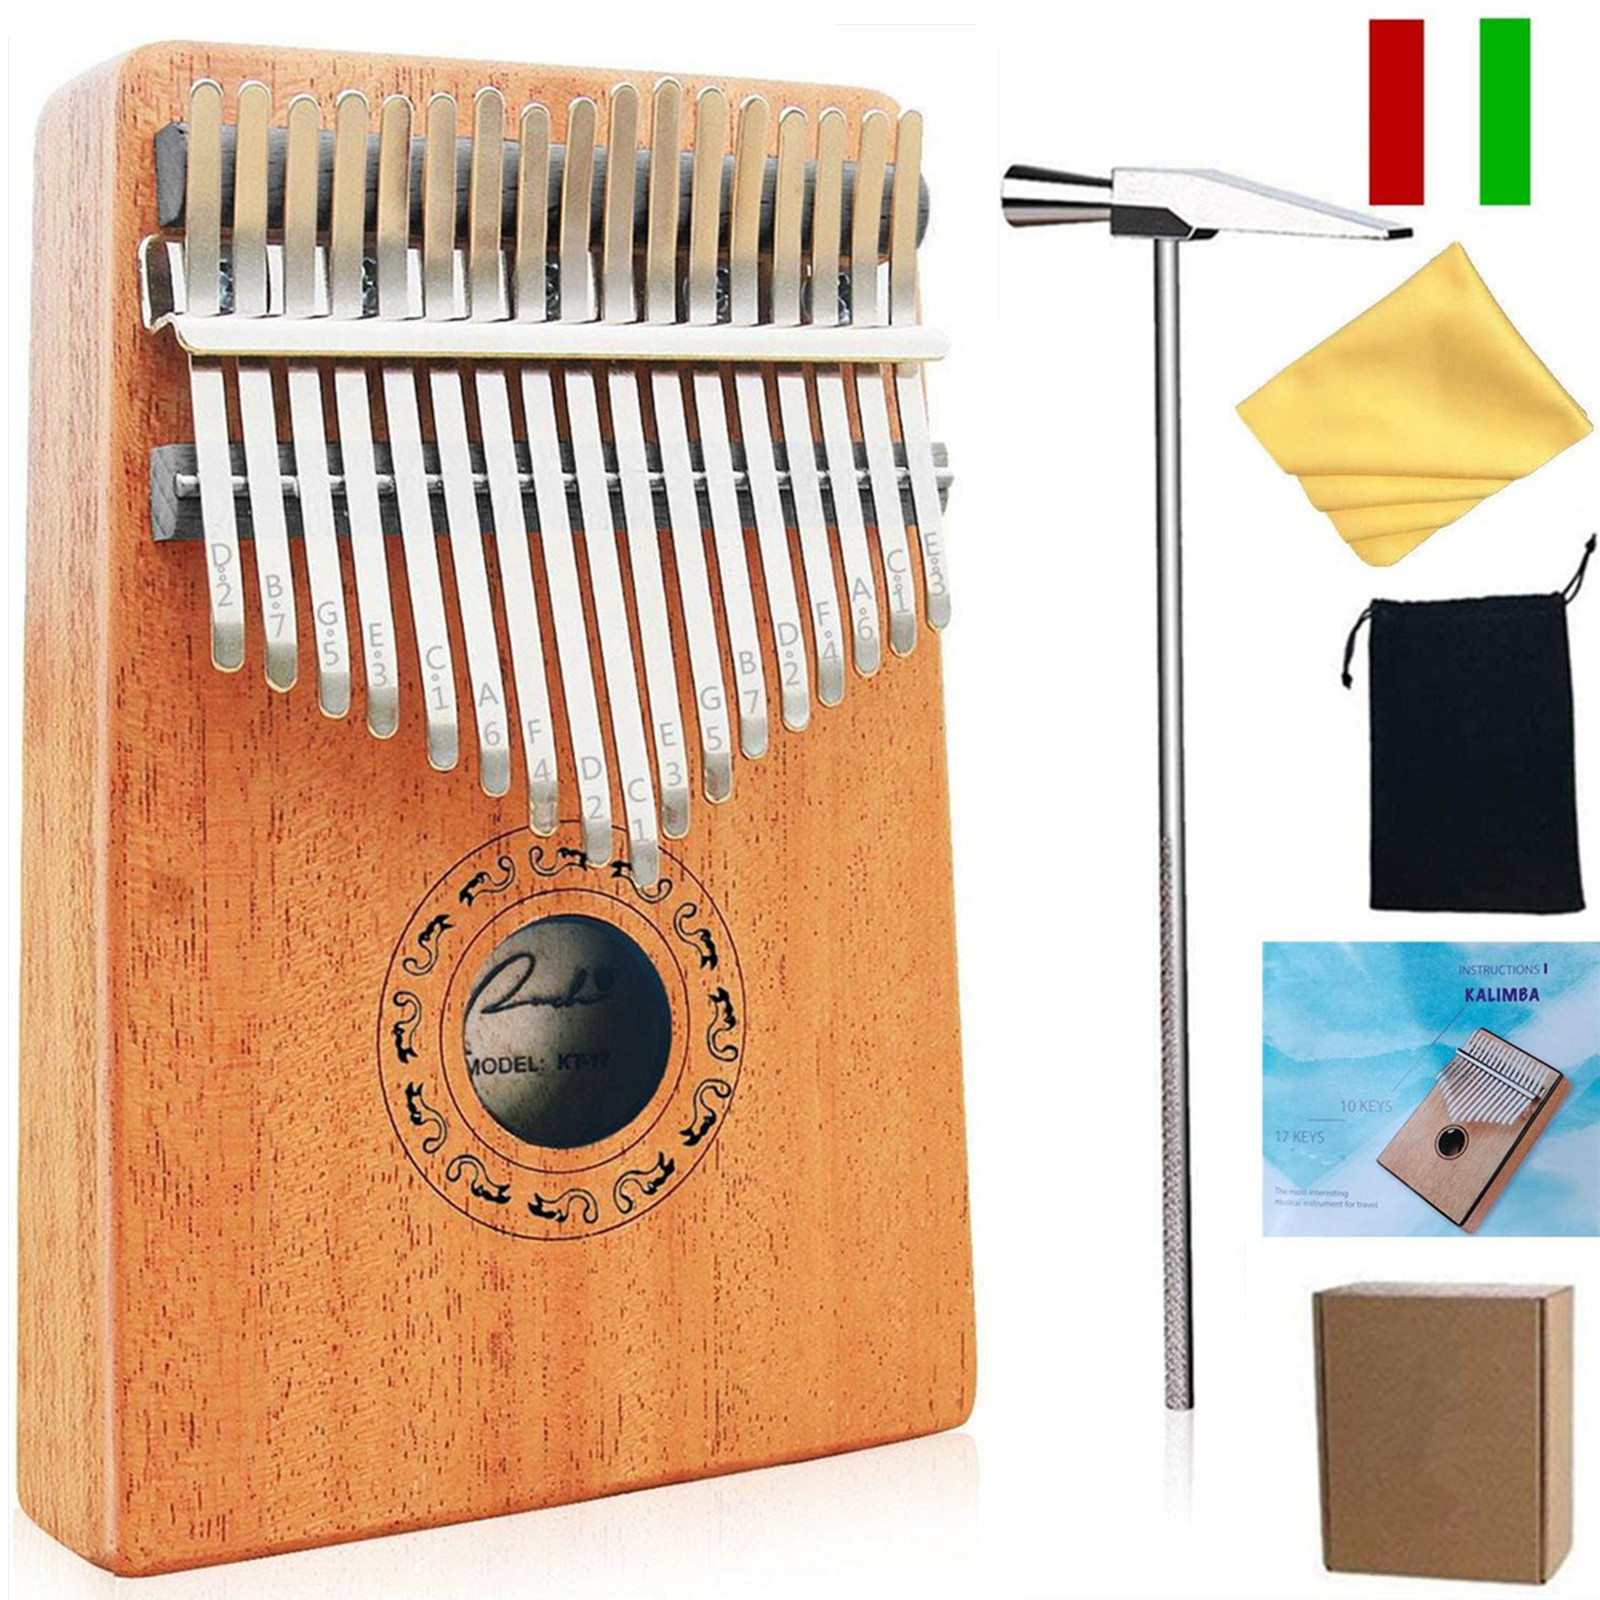 Details about   17-key Kalimba Portable Thumb Piano Mbira Mahogany Wood with Carry Bag O0C6 